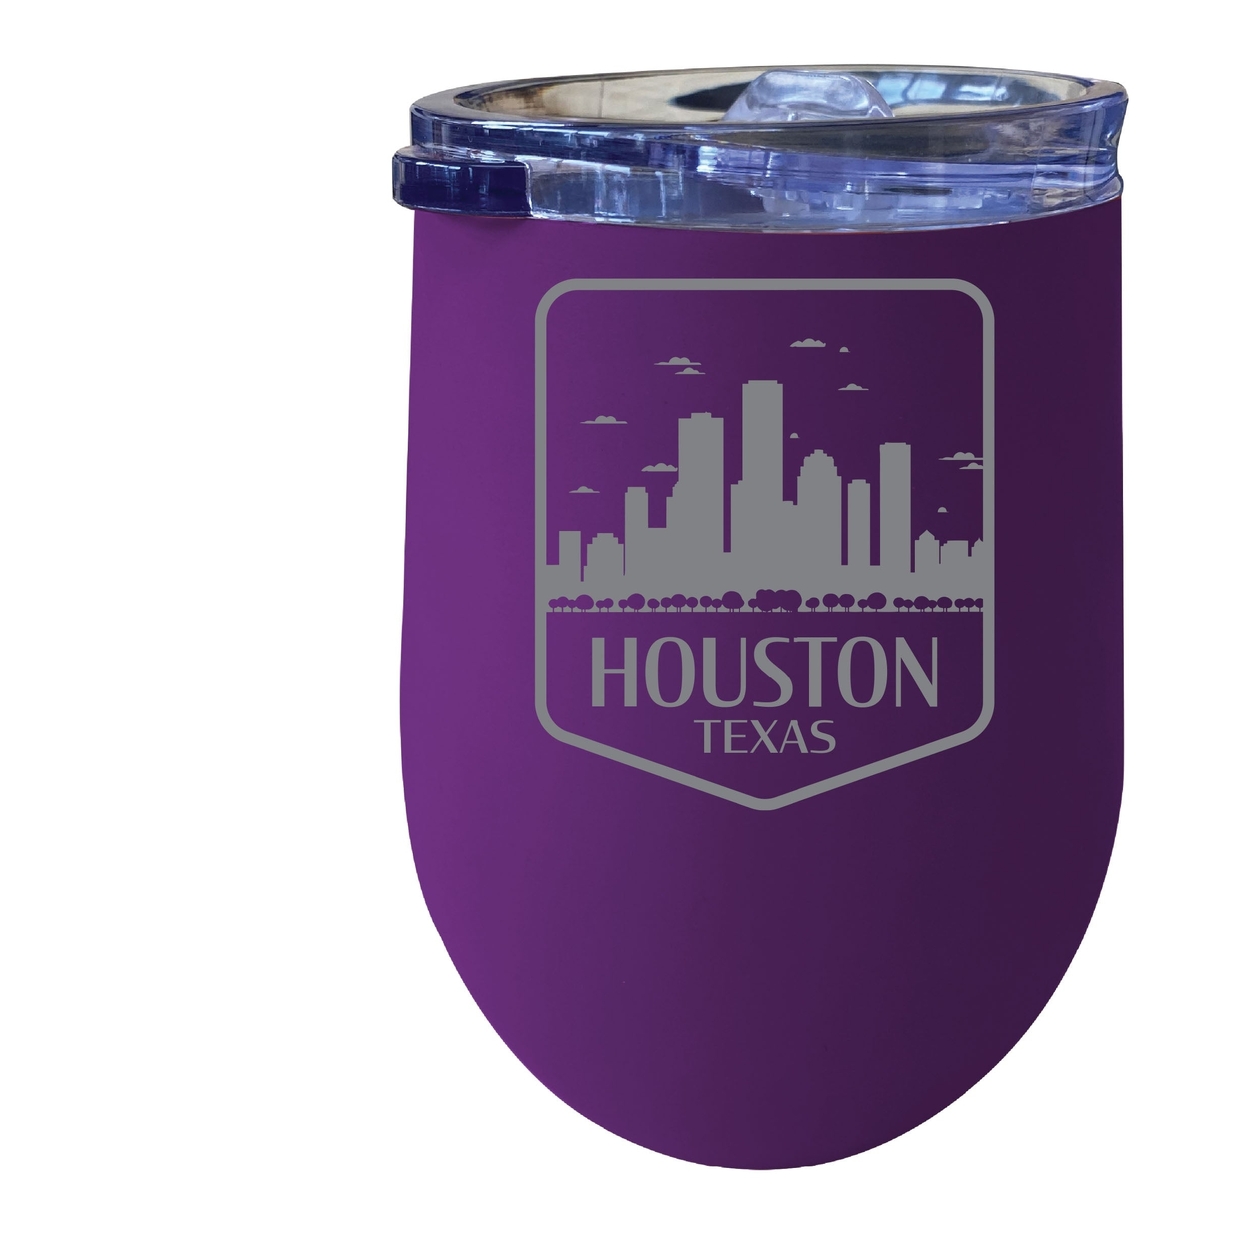 Houston Texas Souvenir 12 Oz Engraved Insulated Wine Stainless Steel Tumbler - Purple,,Single Unit